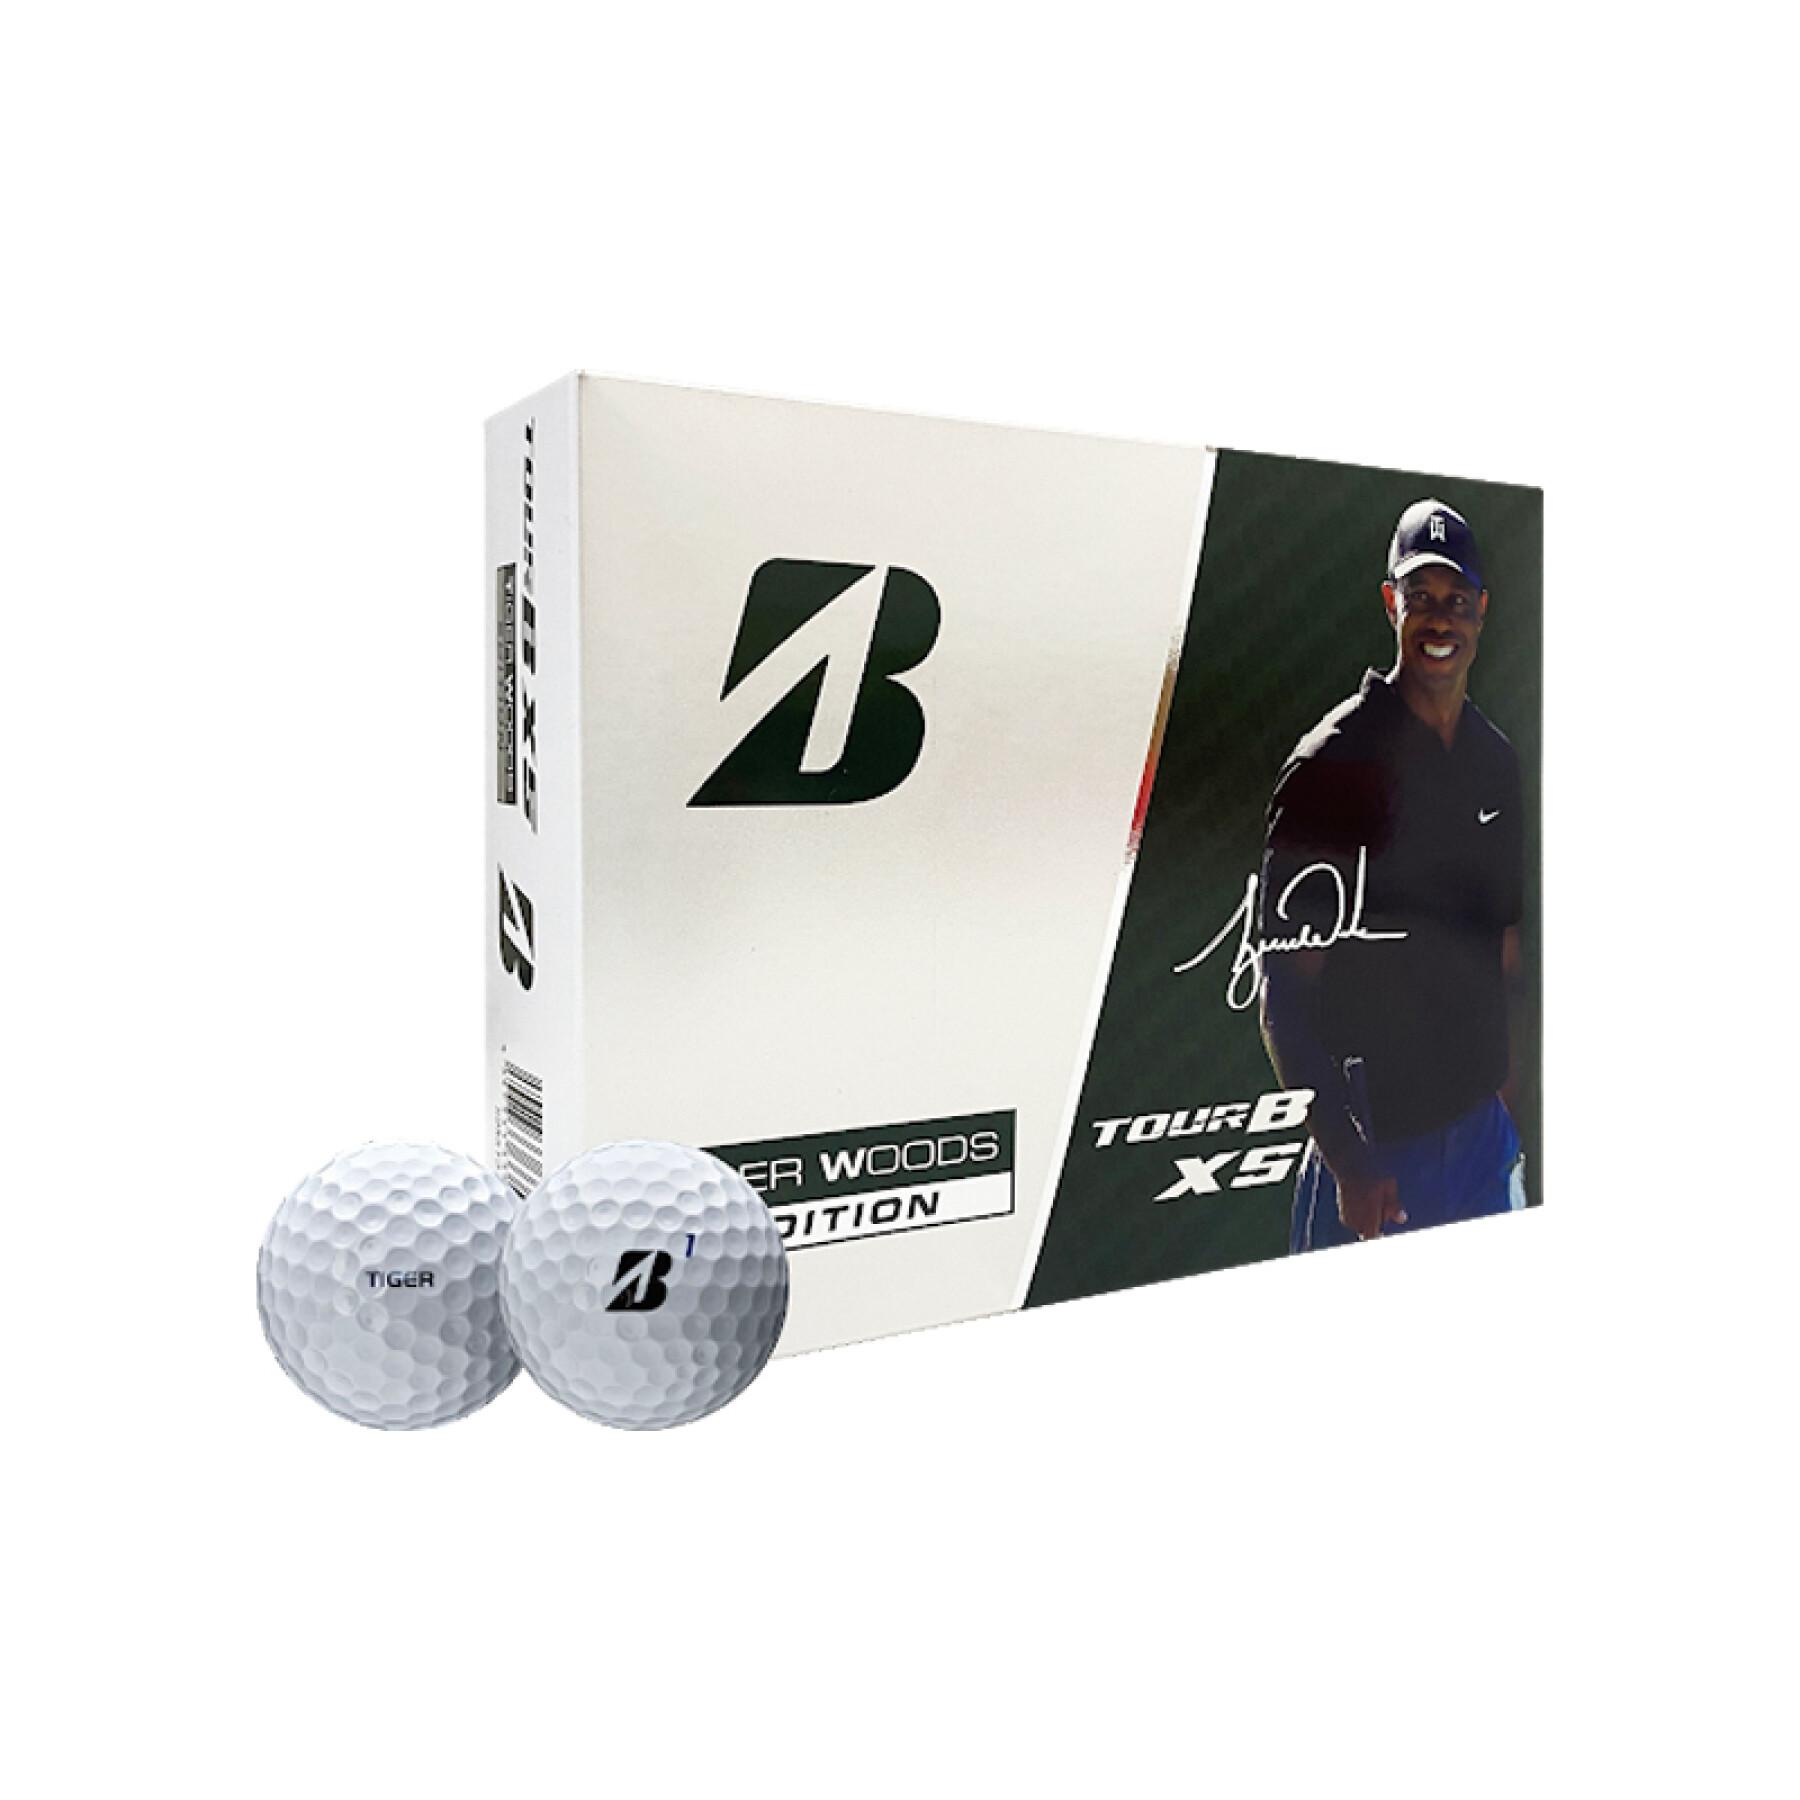 Bolas de golfe Bridgestone Tour B XS Tiger Edition